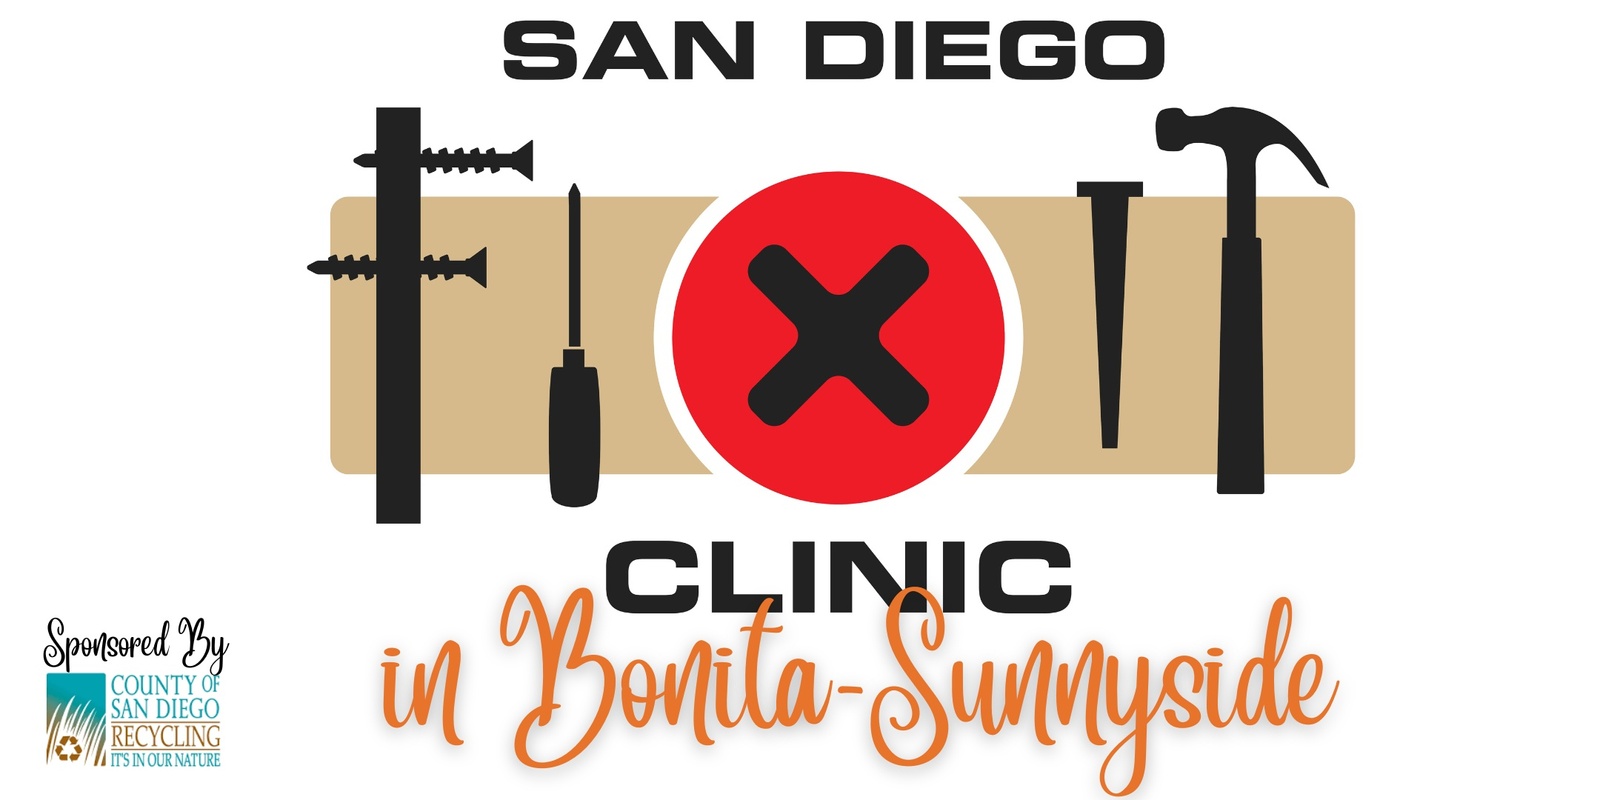 Banner image for SD Fixit Clinic in Bonita-Sunnyside